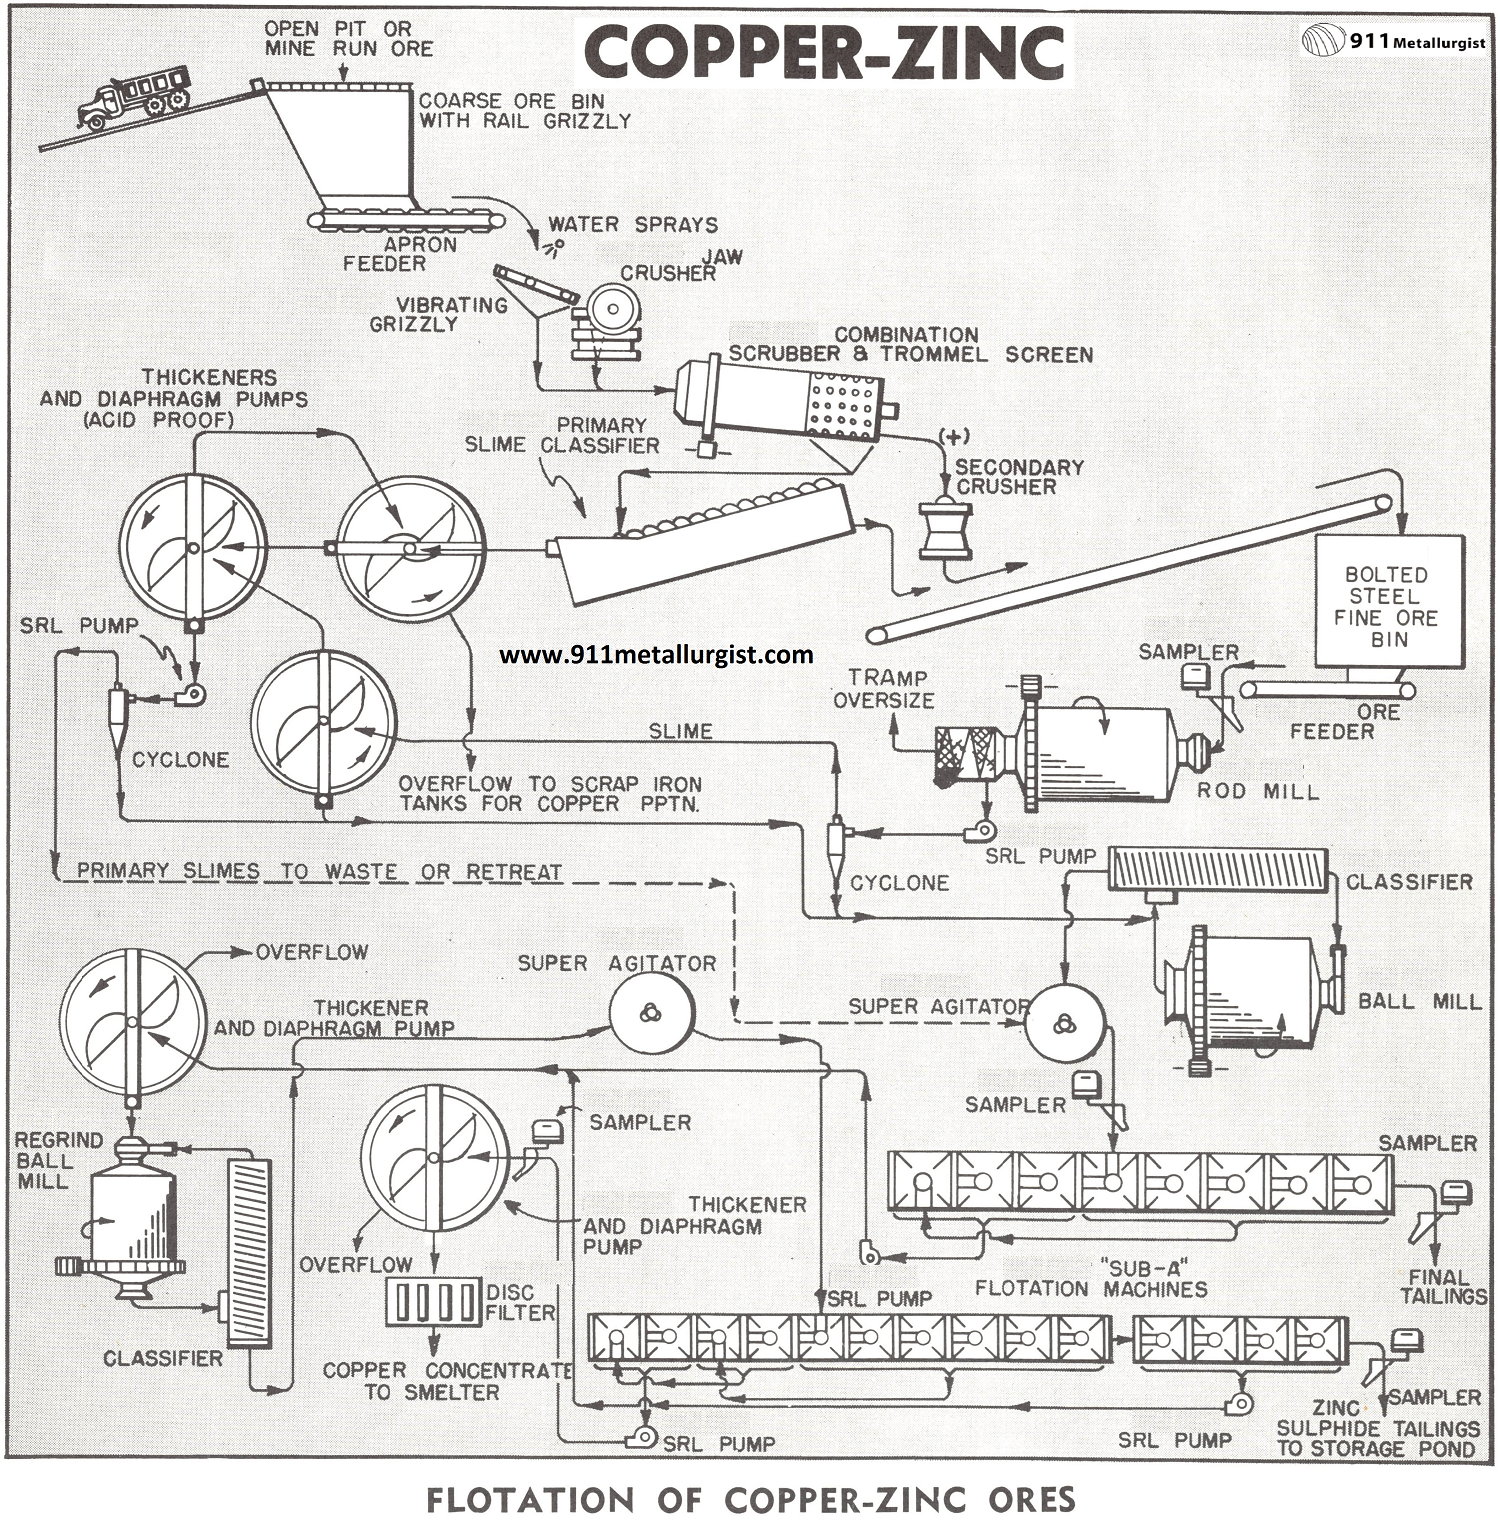 Flotation of Copper-Zinc Ores